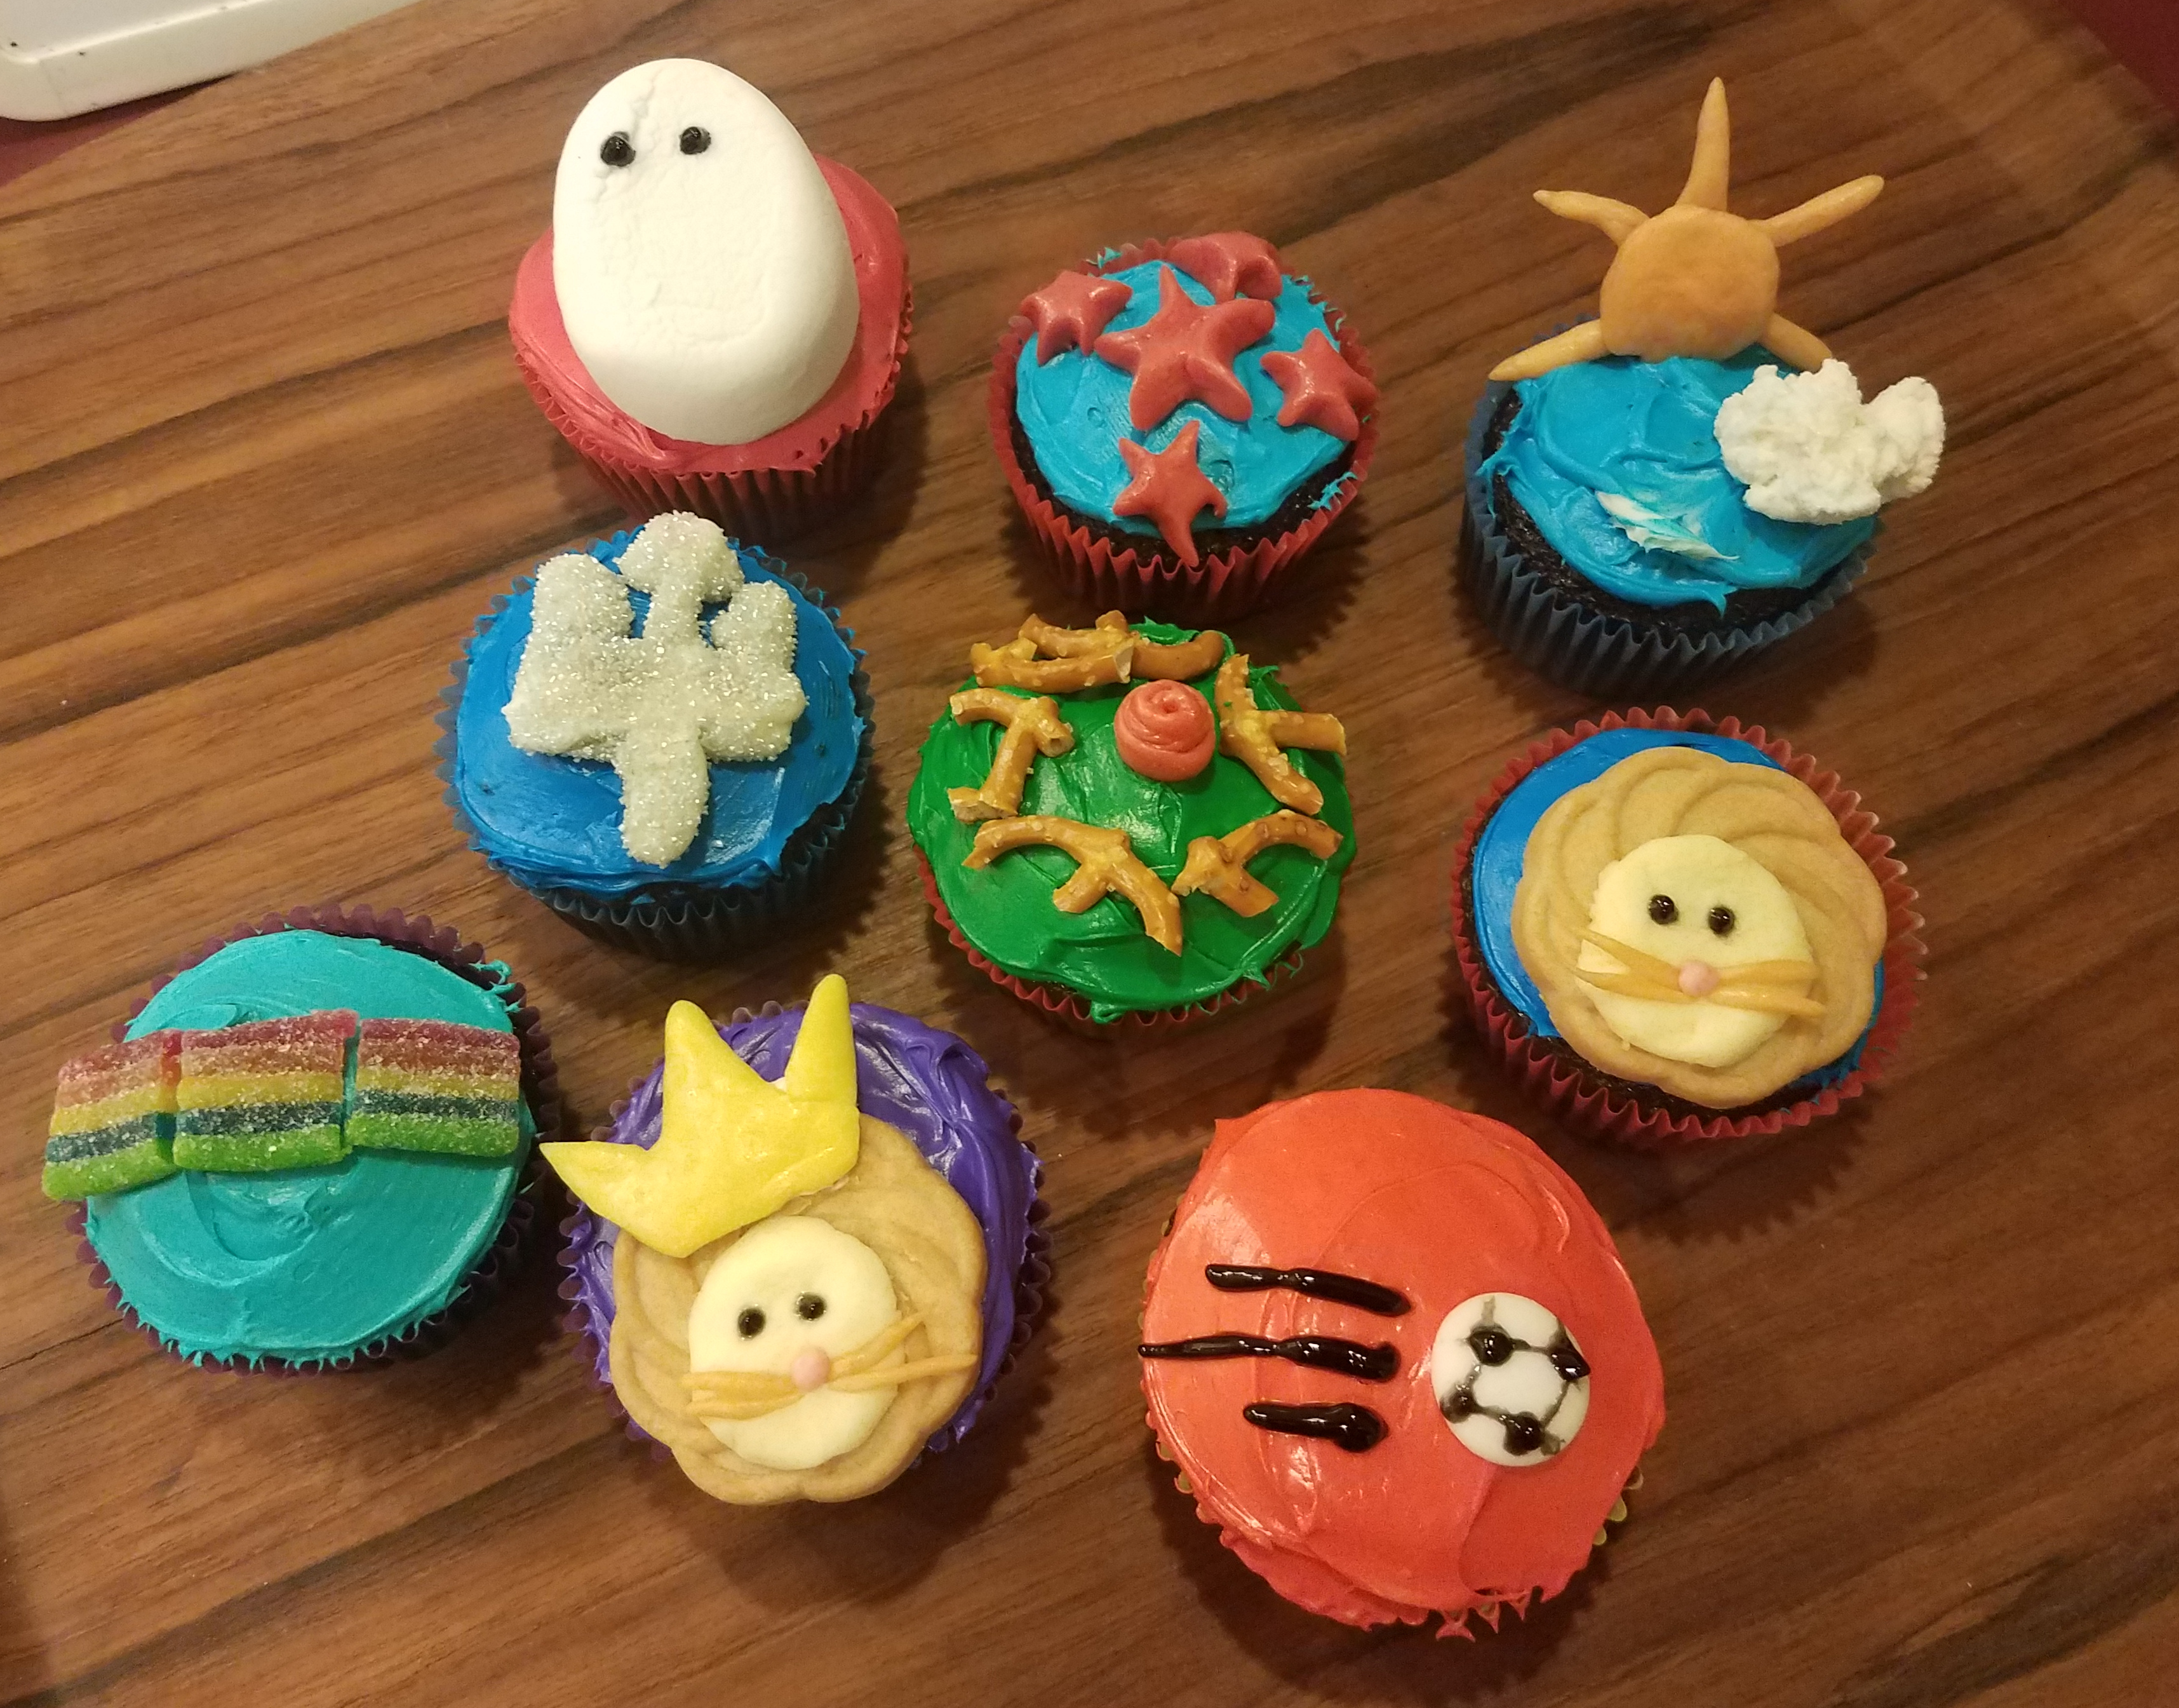 Nine cupcakes representing each of the NWSL teams